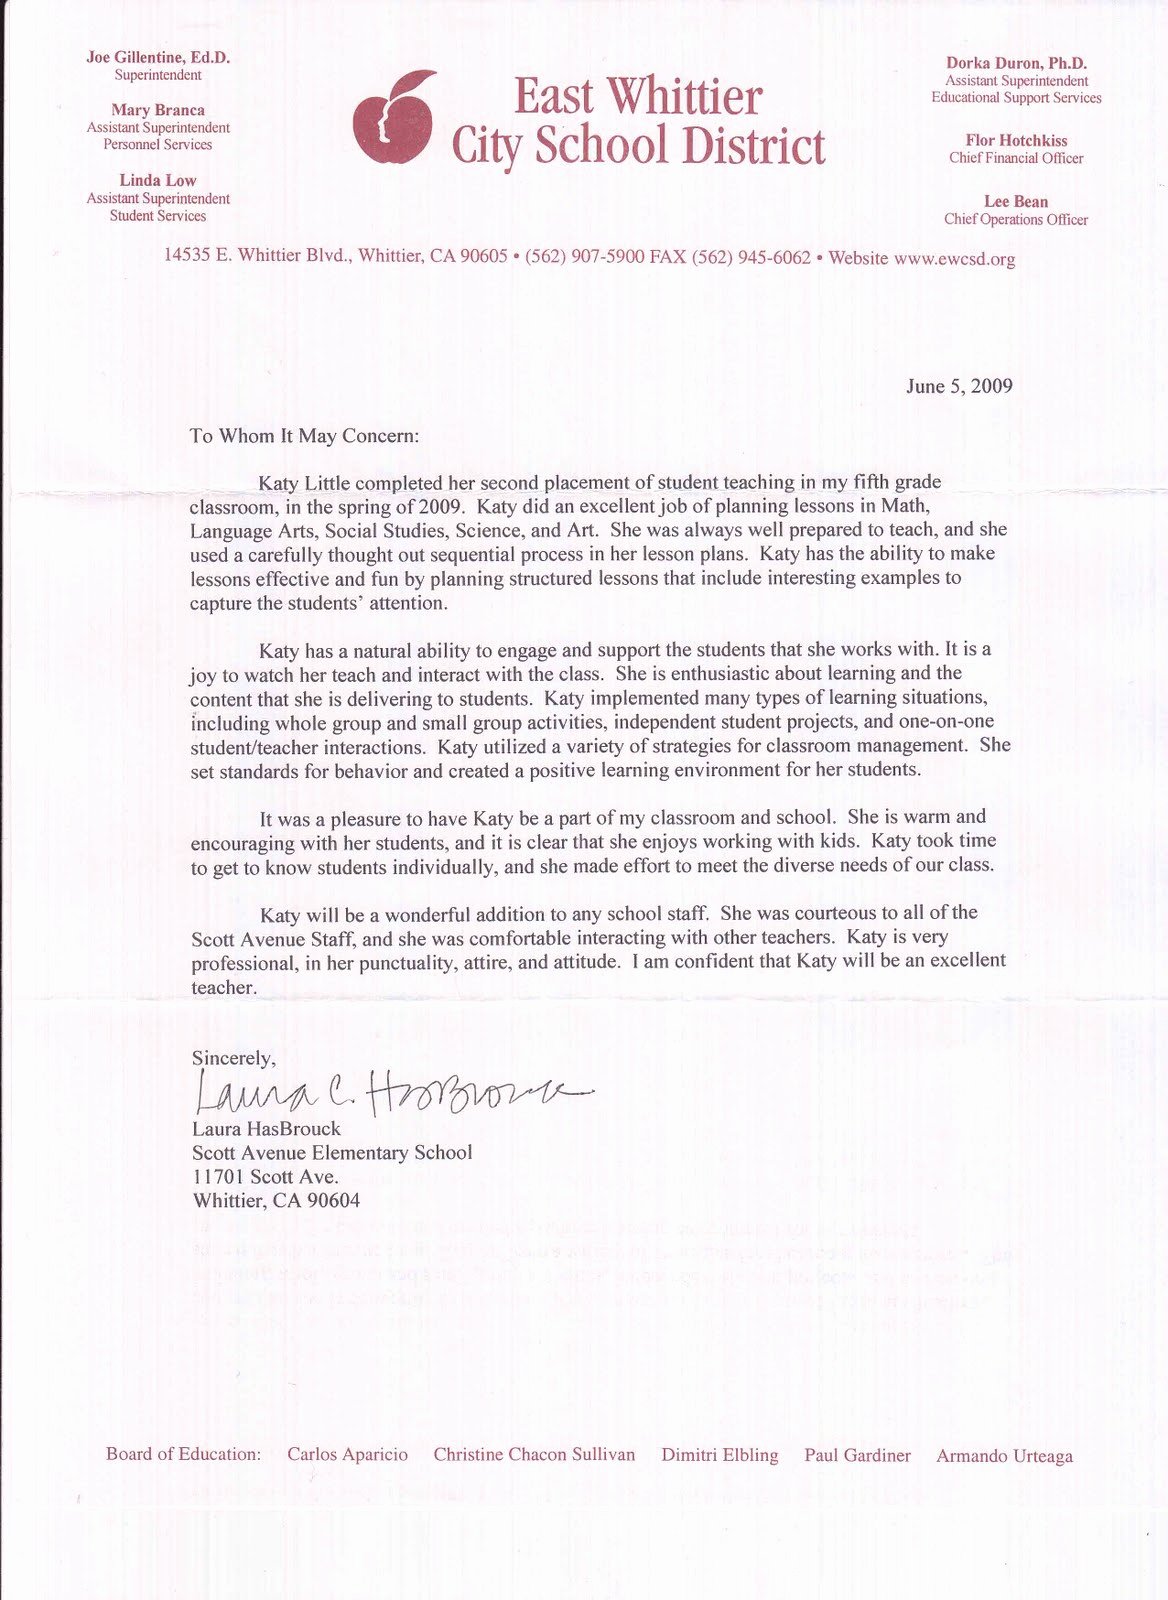 Teacher Letters Of Recommendation Fresh Kathryn Little Letters Of Re Mendation Student Teaching